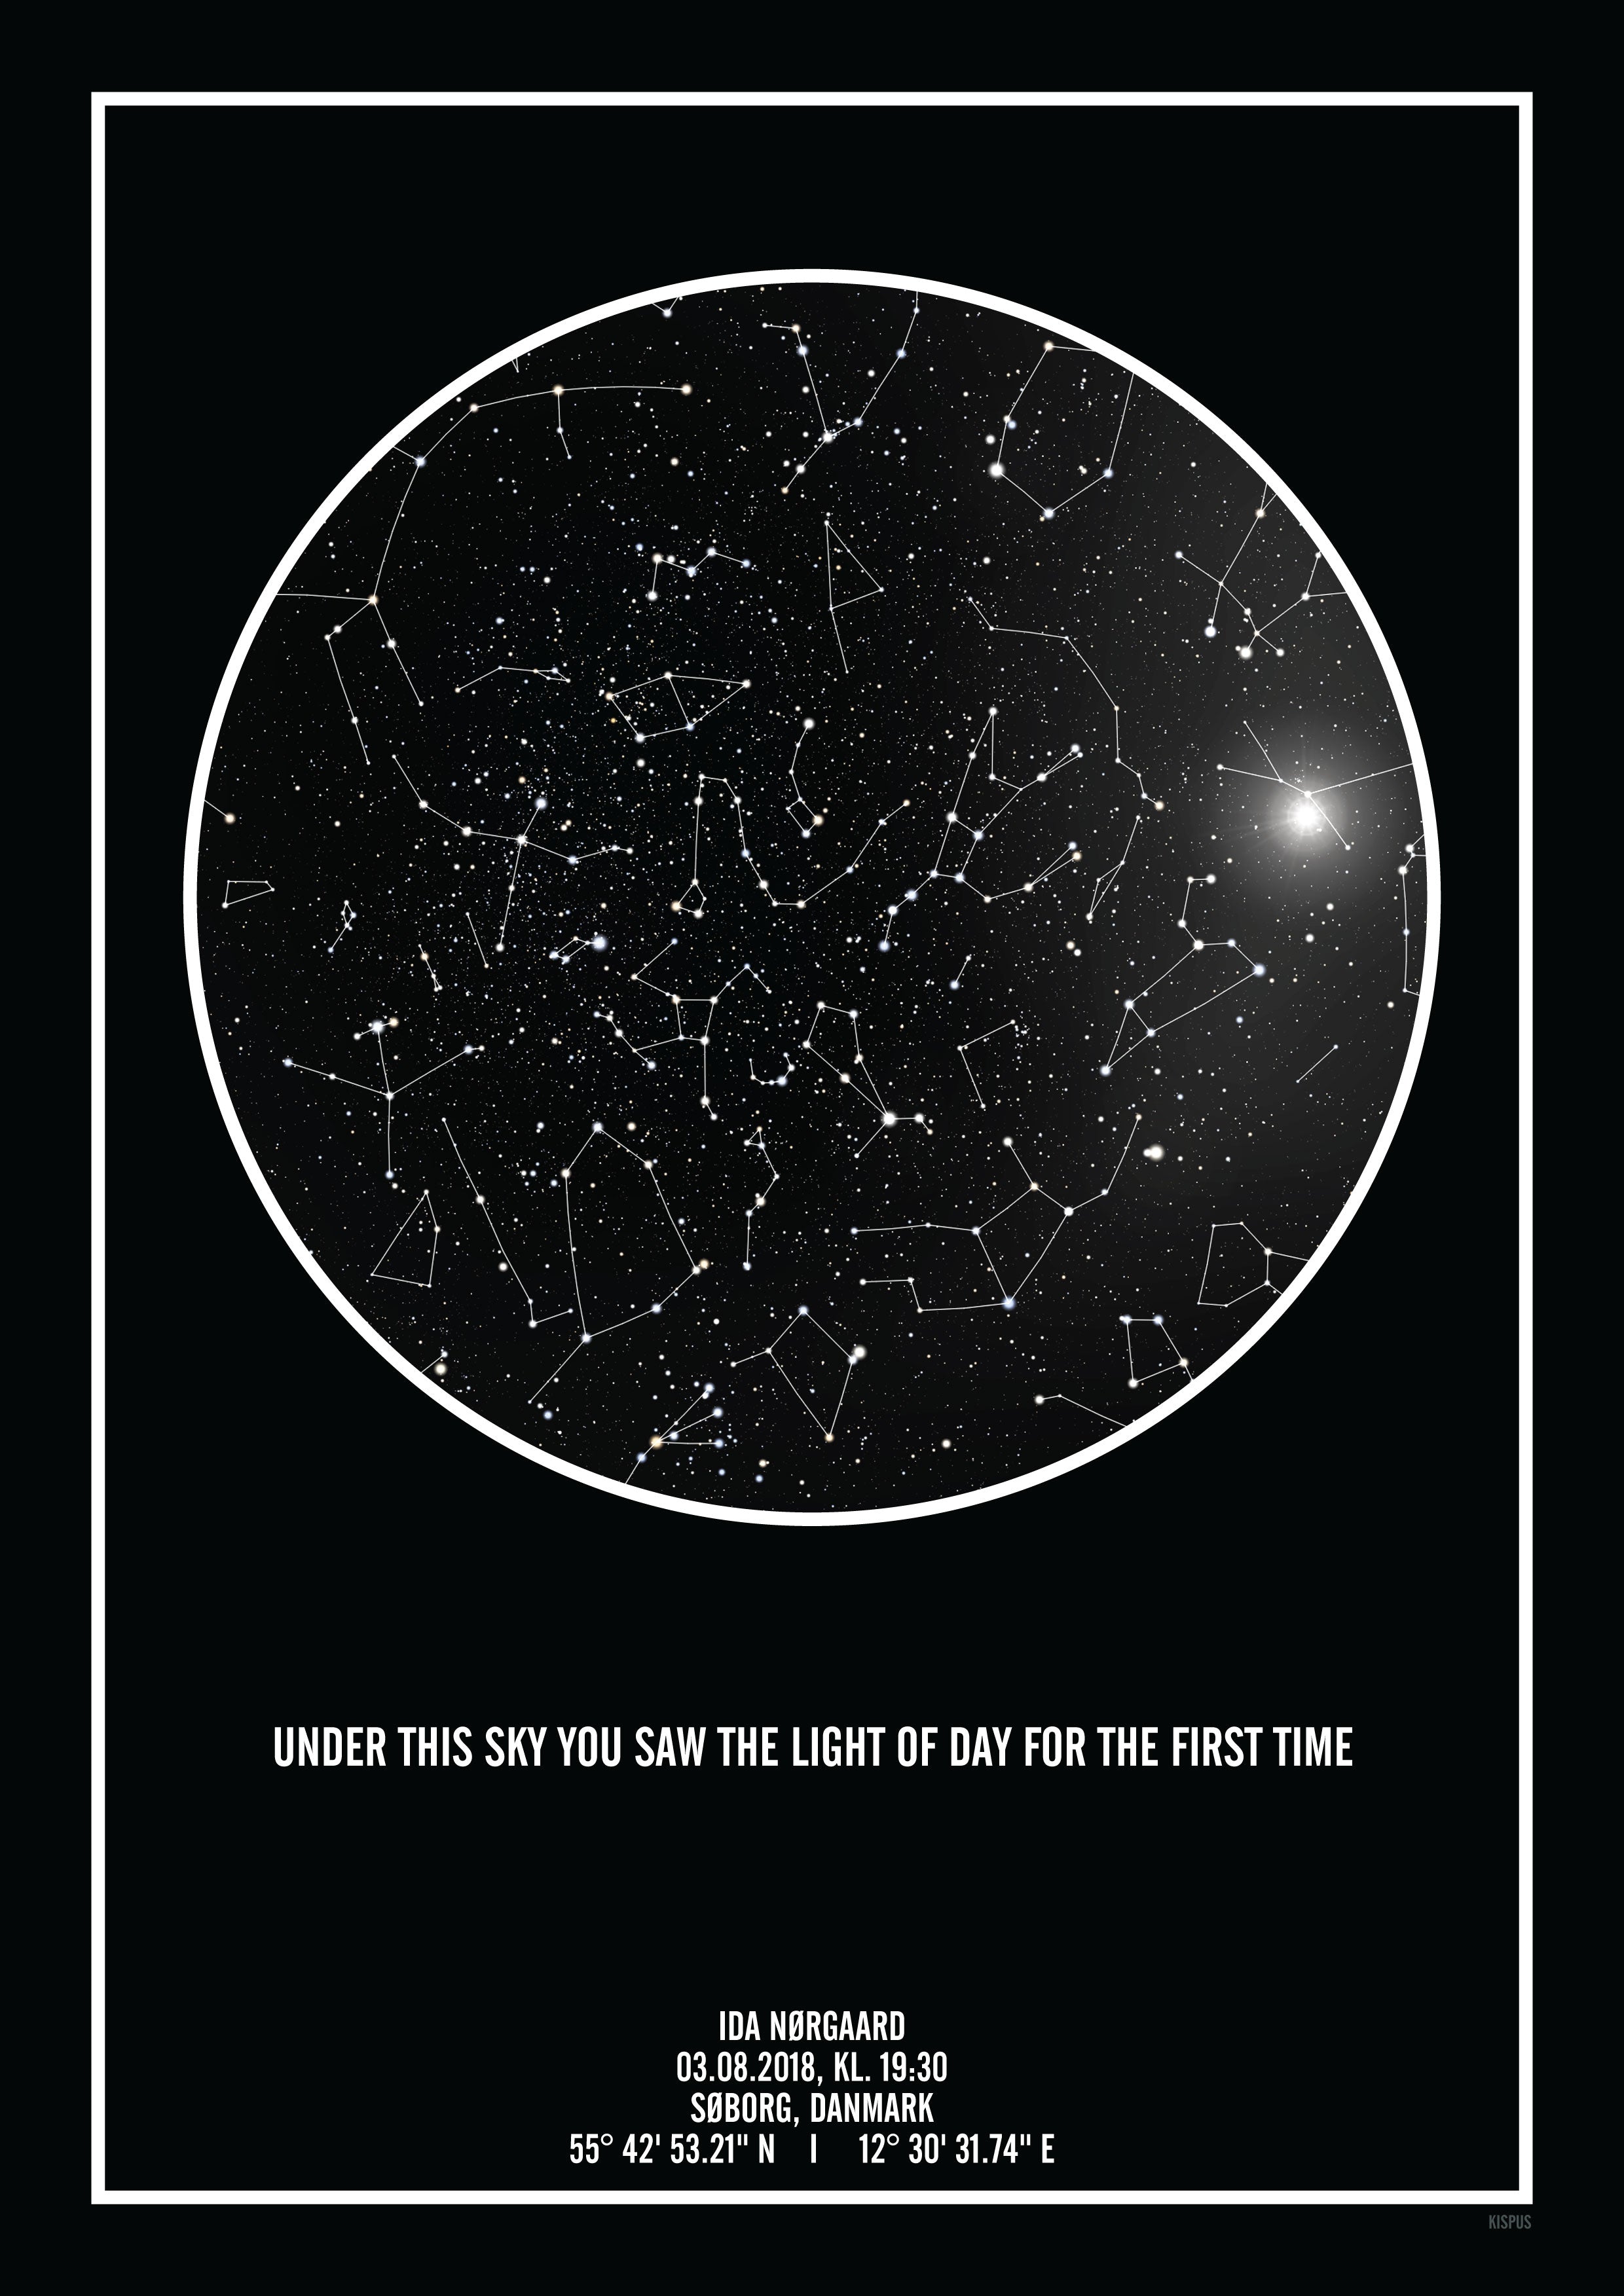 Se PERSONLIG STJERNEHIMMEL PLAKAT (SORT) - 50x70 / Stjernehimmel med stjernebilleder hos KISPUS